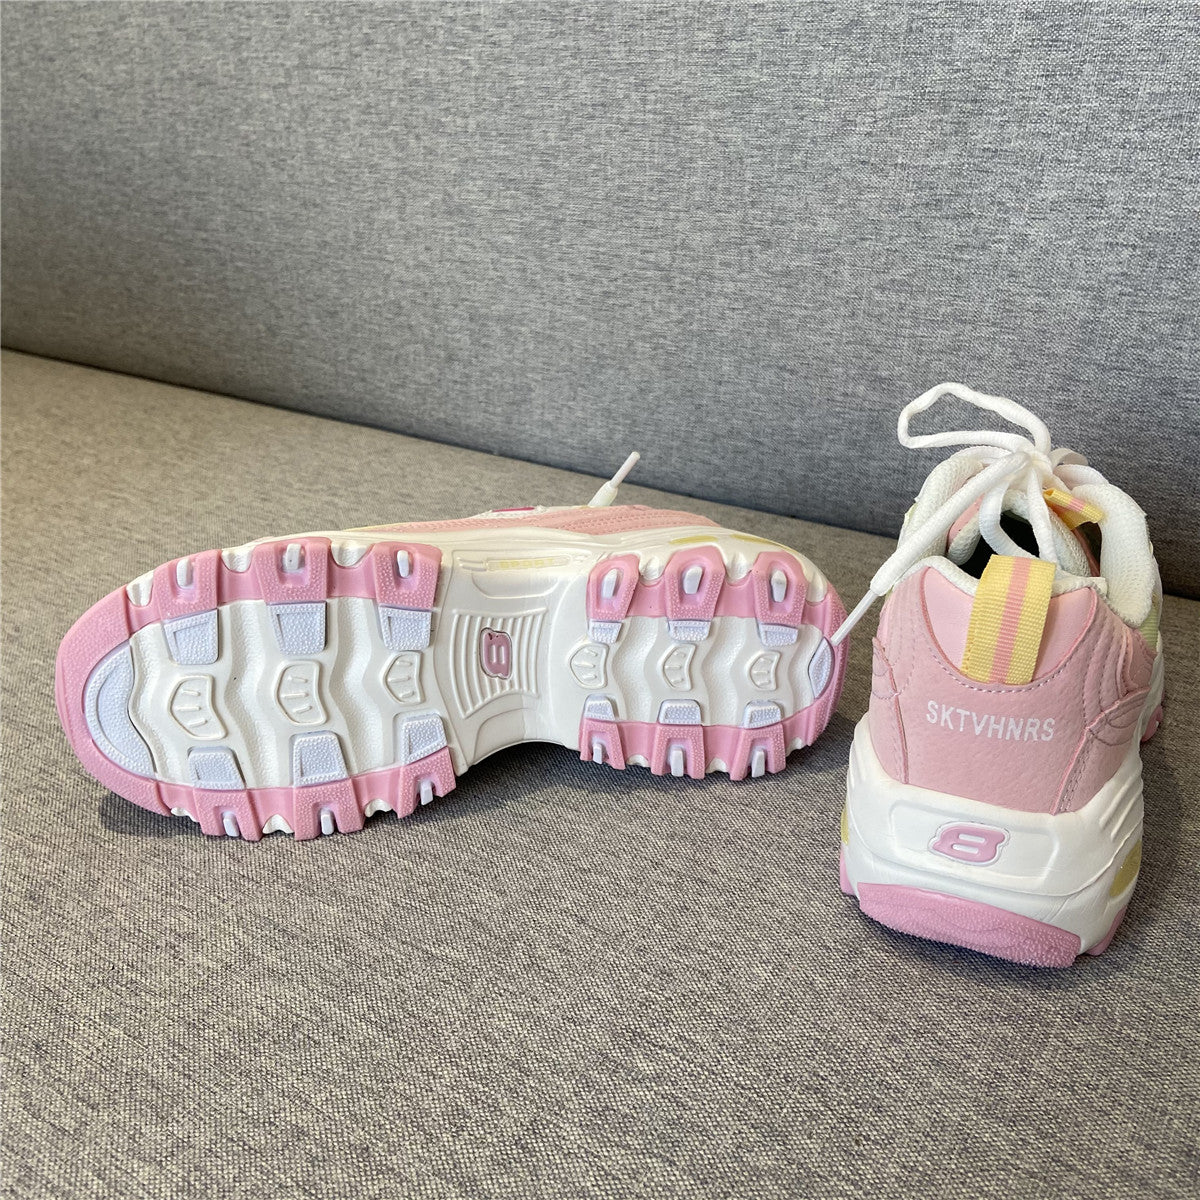 Cute Sneakers - Kimi